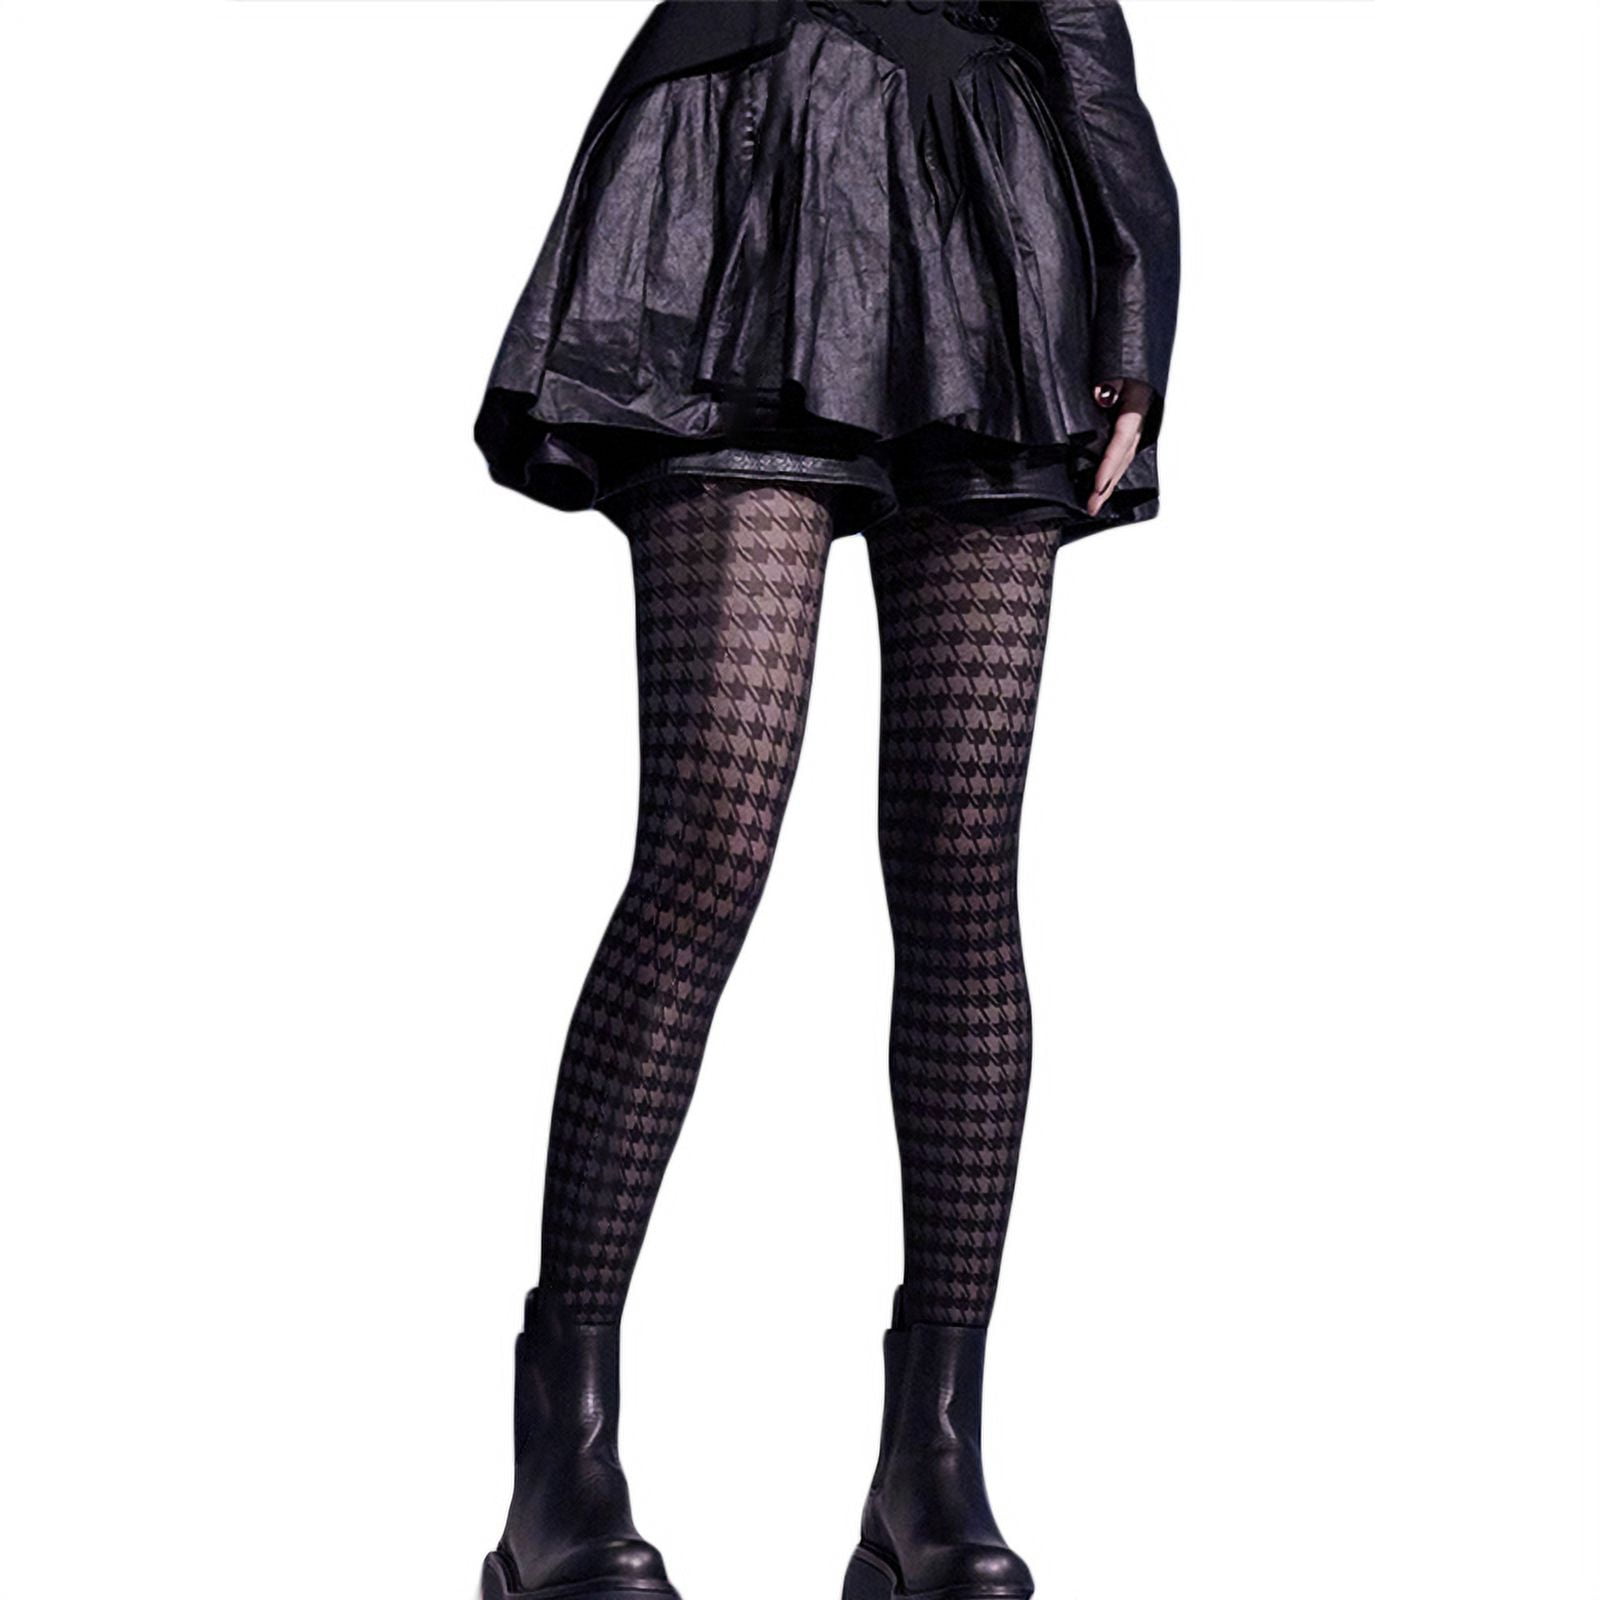 NancyBrandy Fishnet Trim Lace Up Gothic Punk Leggins Pants - Black in  Hosiery, Leggings, Stockings and Socks - $31.49